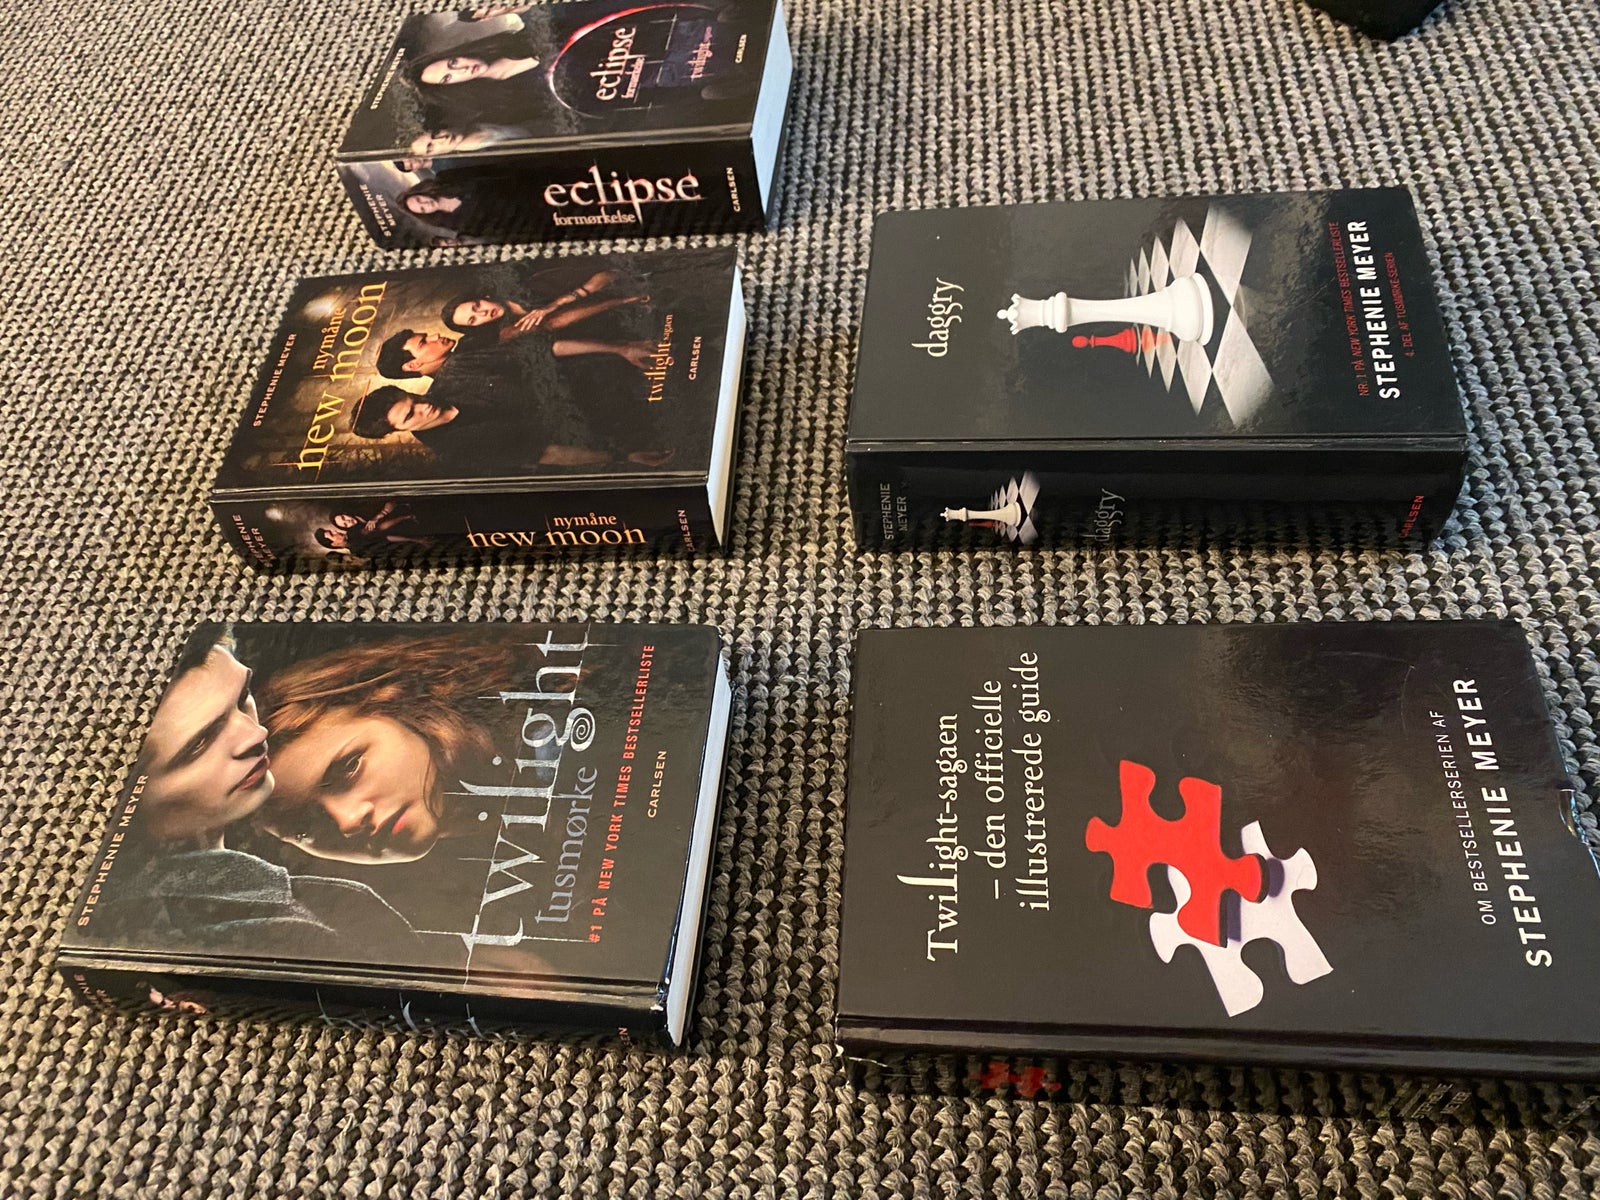 Twilight serien , Stephenie Meyer , Bogsamling